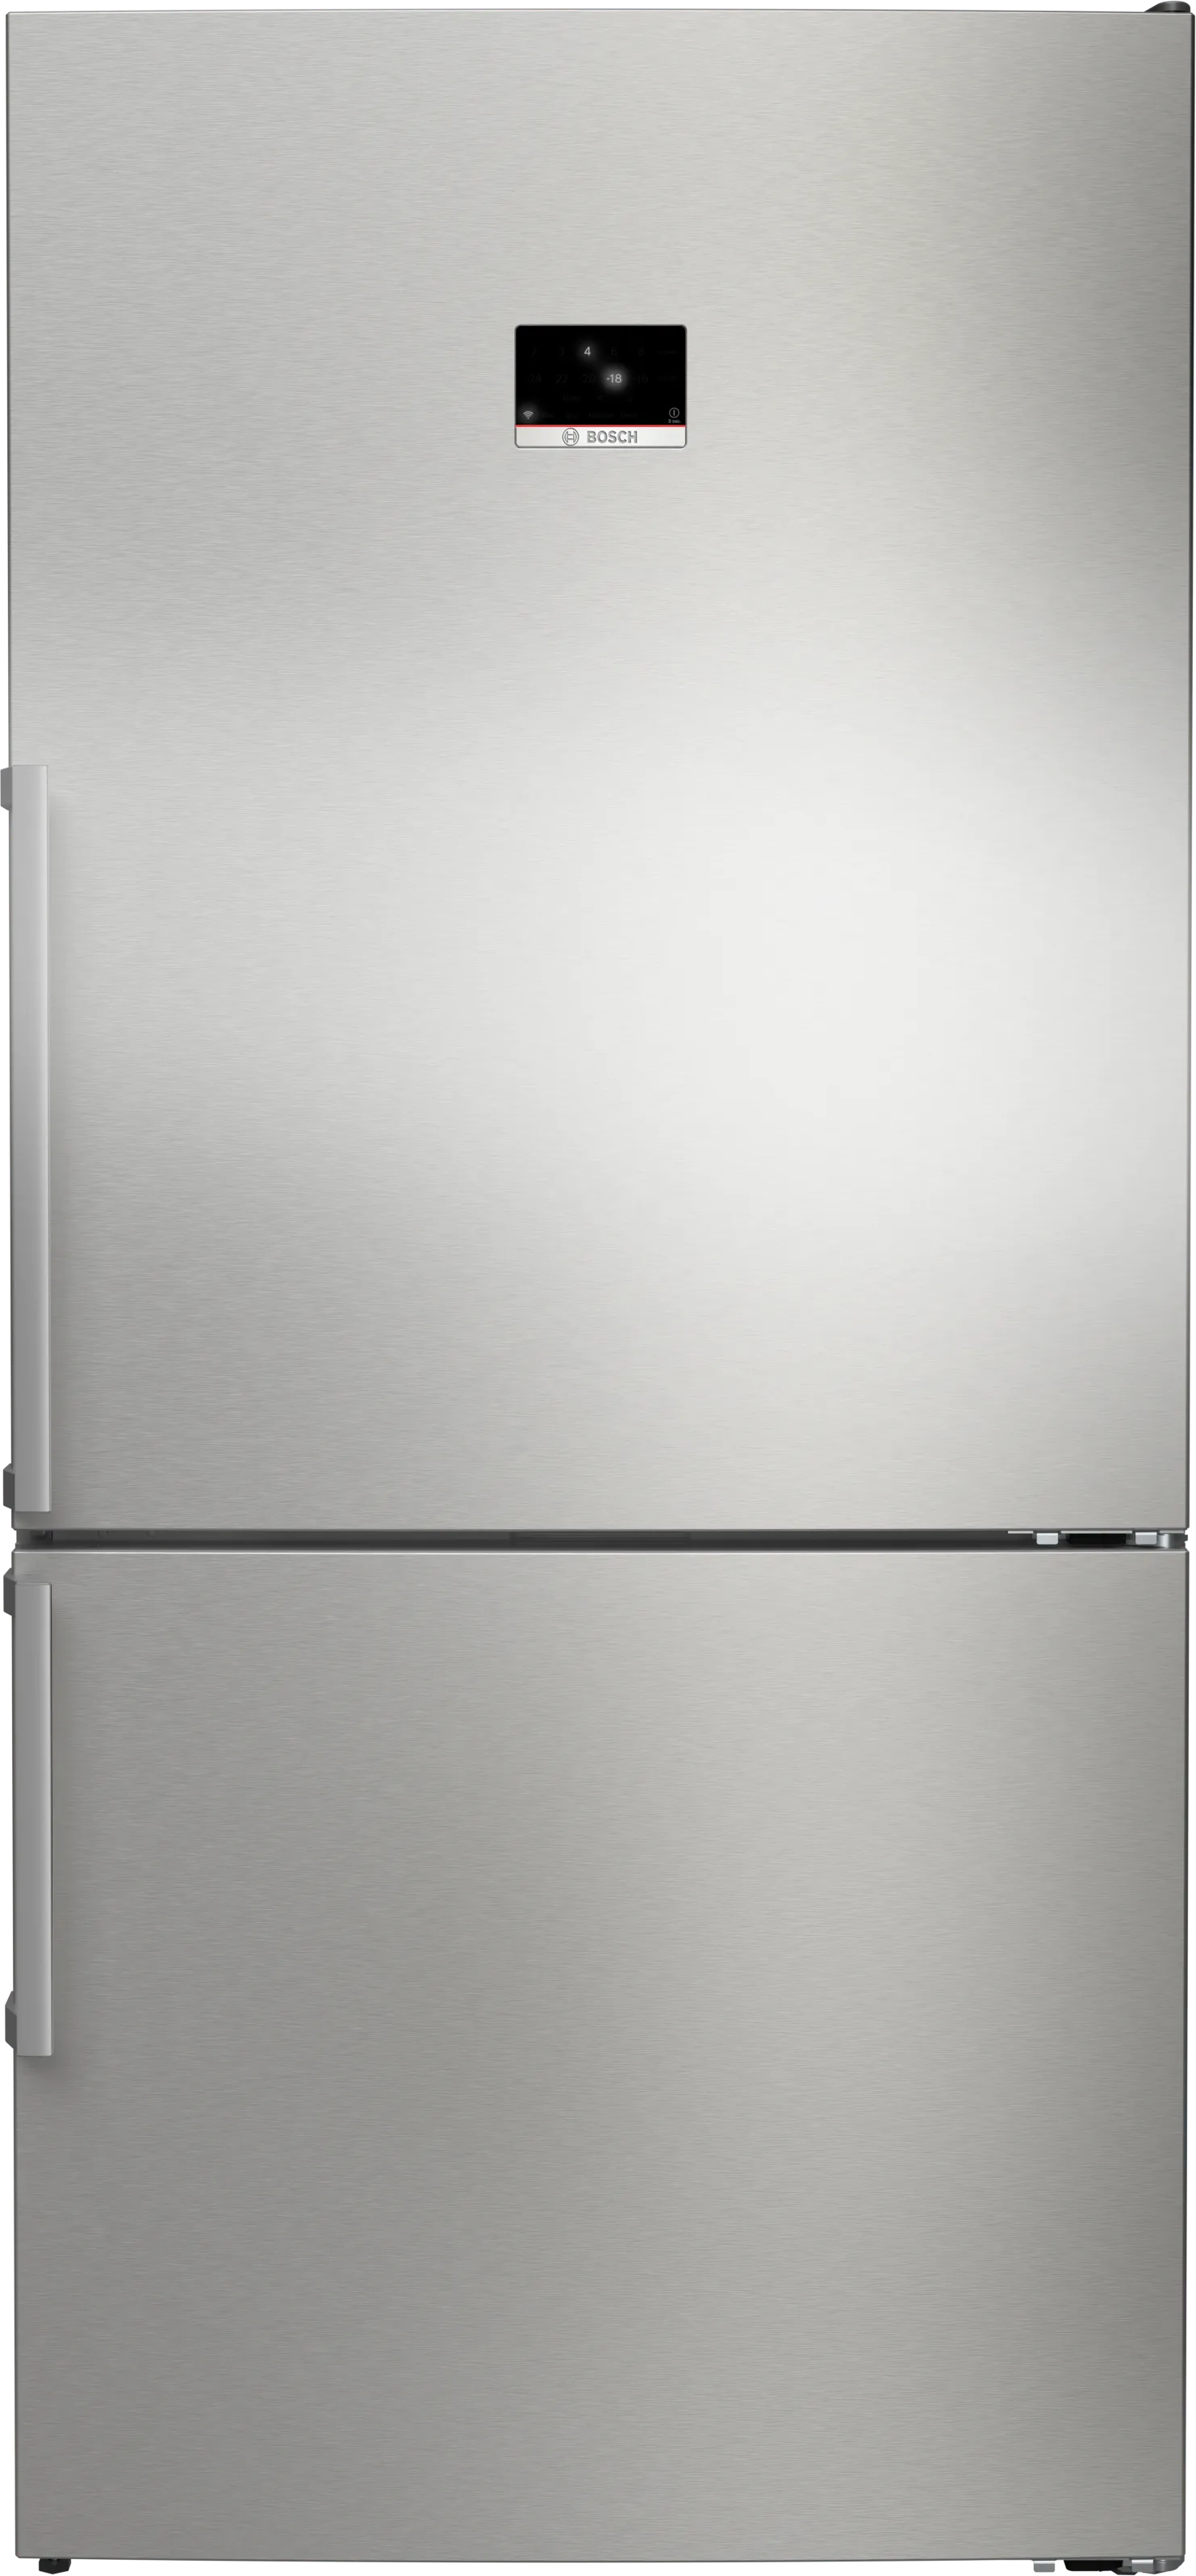 Series 8 free-standing fridge-freezer with freezer at bottom 186 x 86 cm Stainless steel (with anti-fingerprint) 